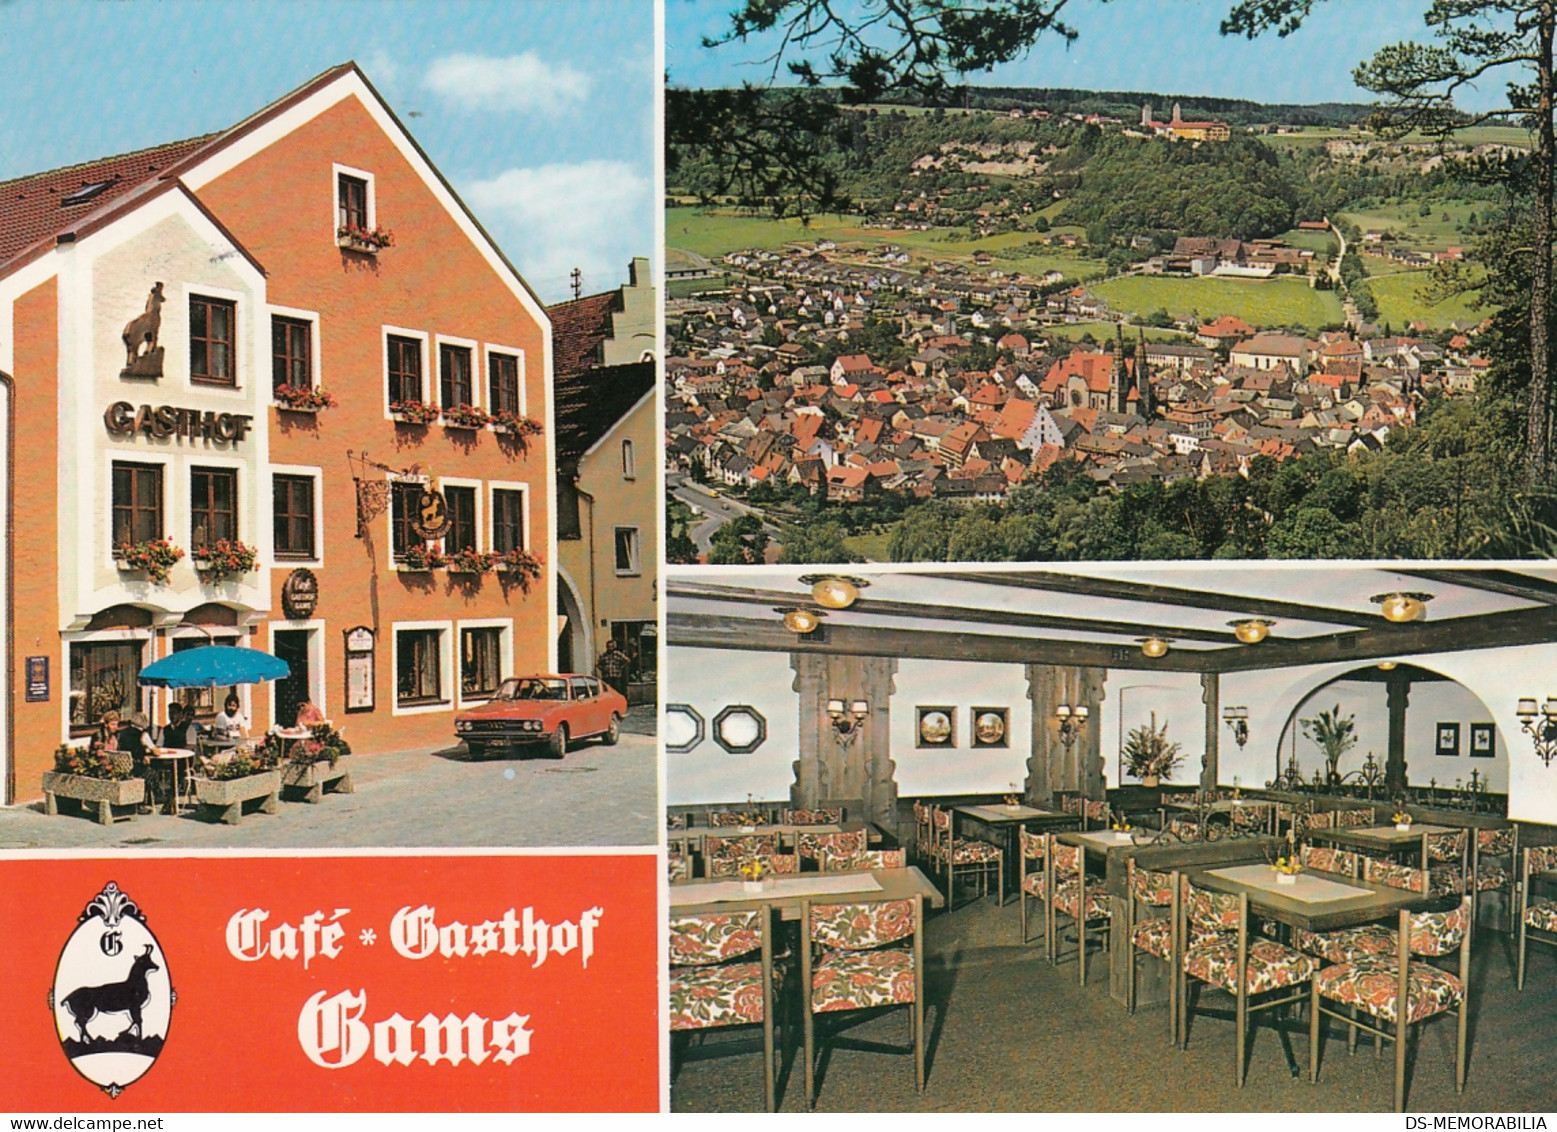 Beilngries - Ringhotel , Cafe Gasthof Gams 1987 - Eichstaett